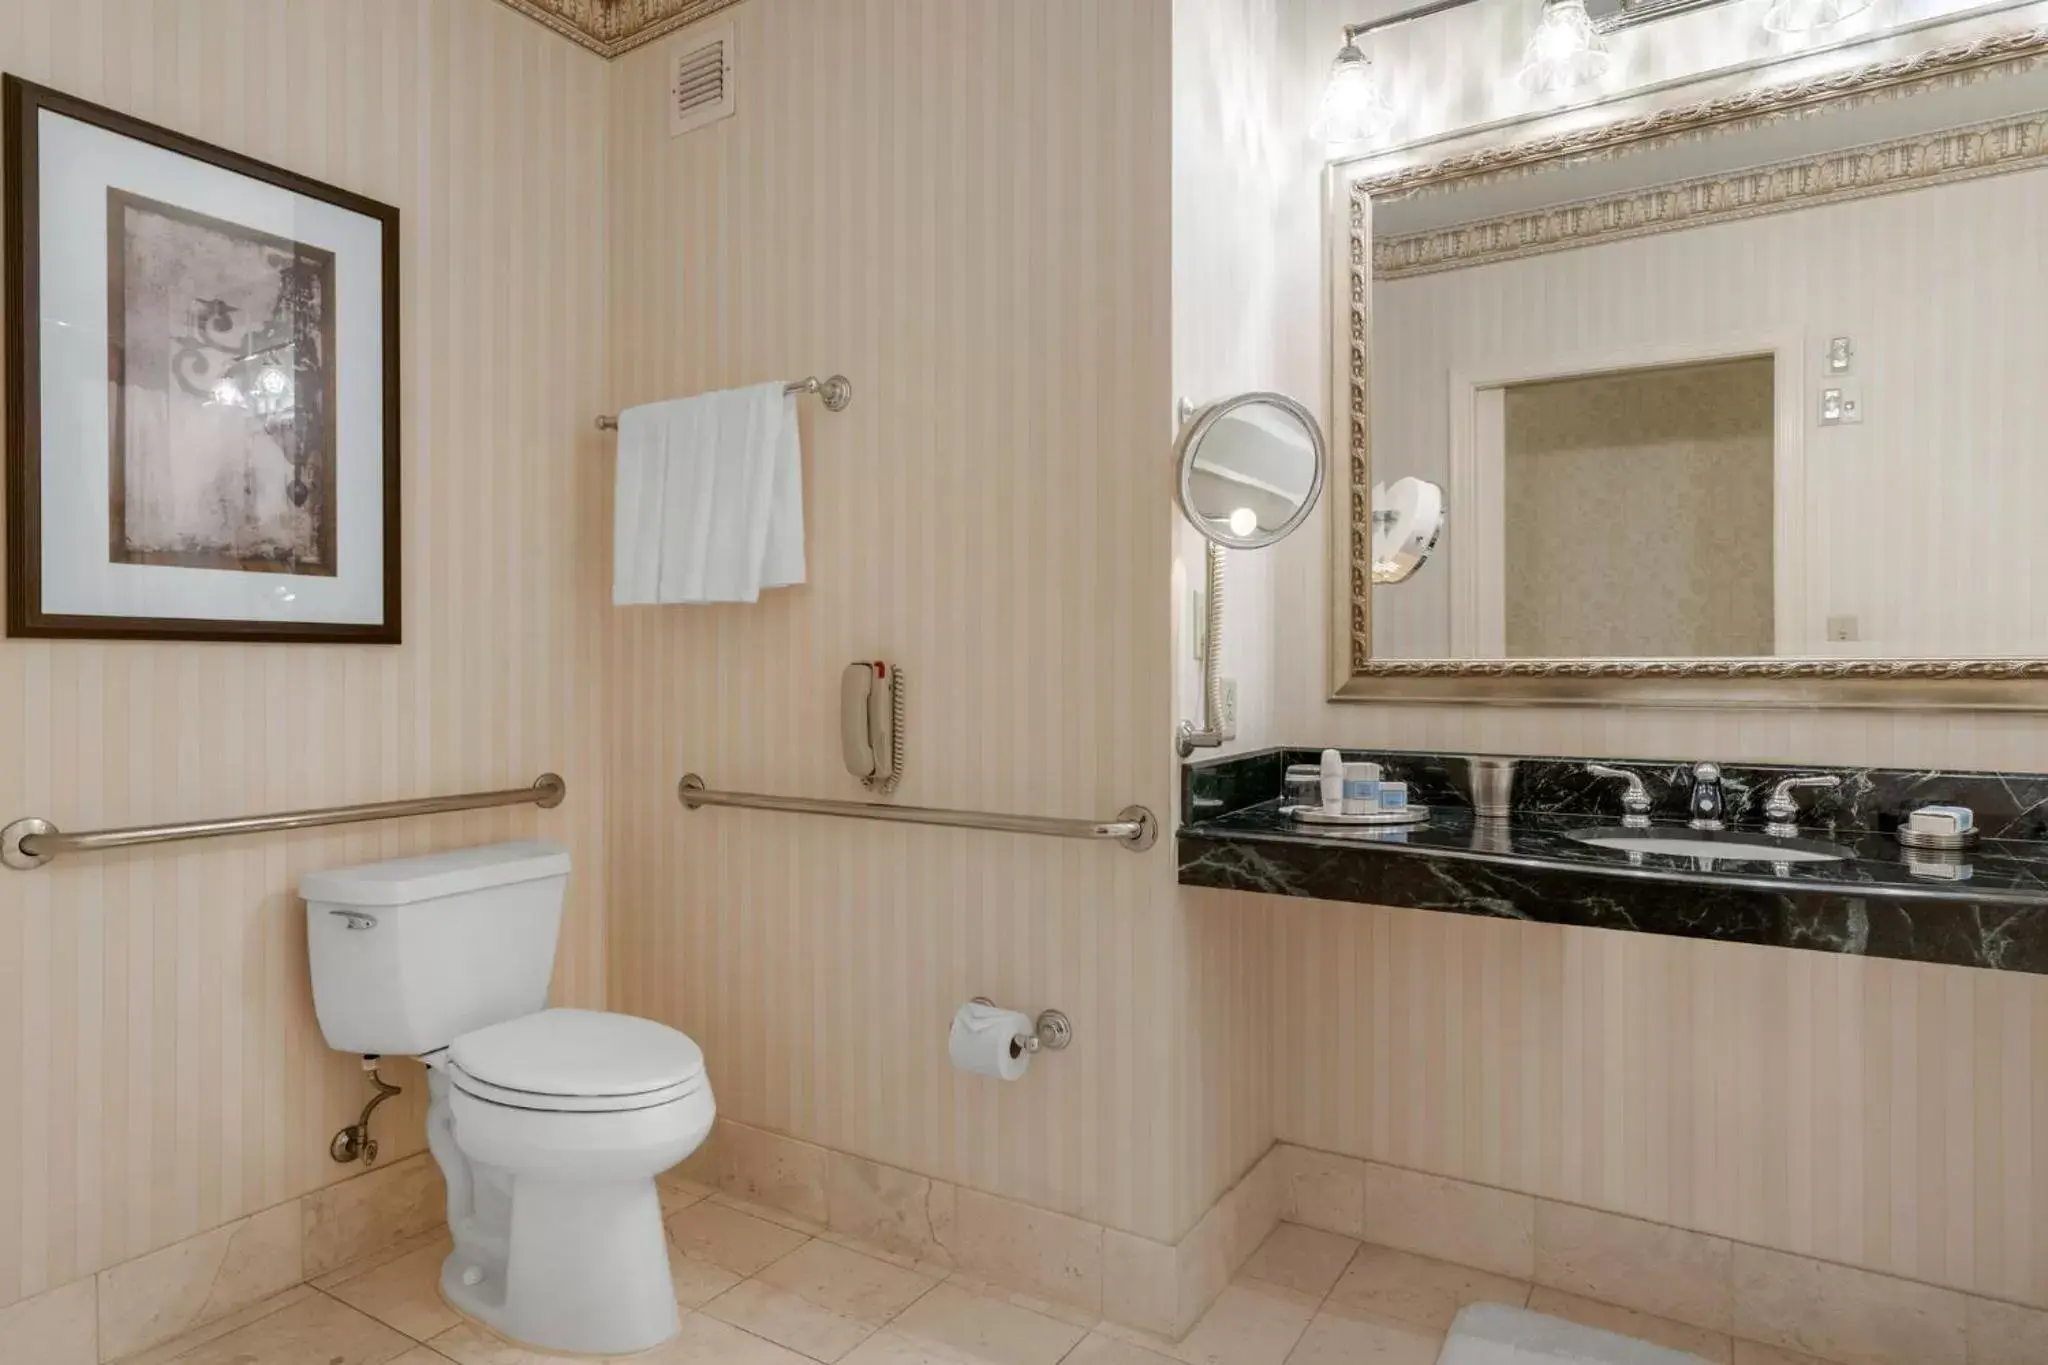 Photo of the whole room, Bathroom in Omni San Francisco